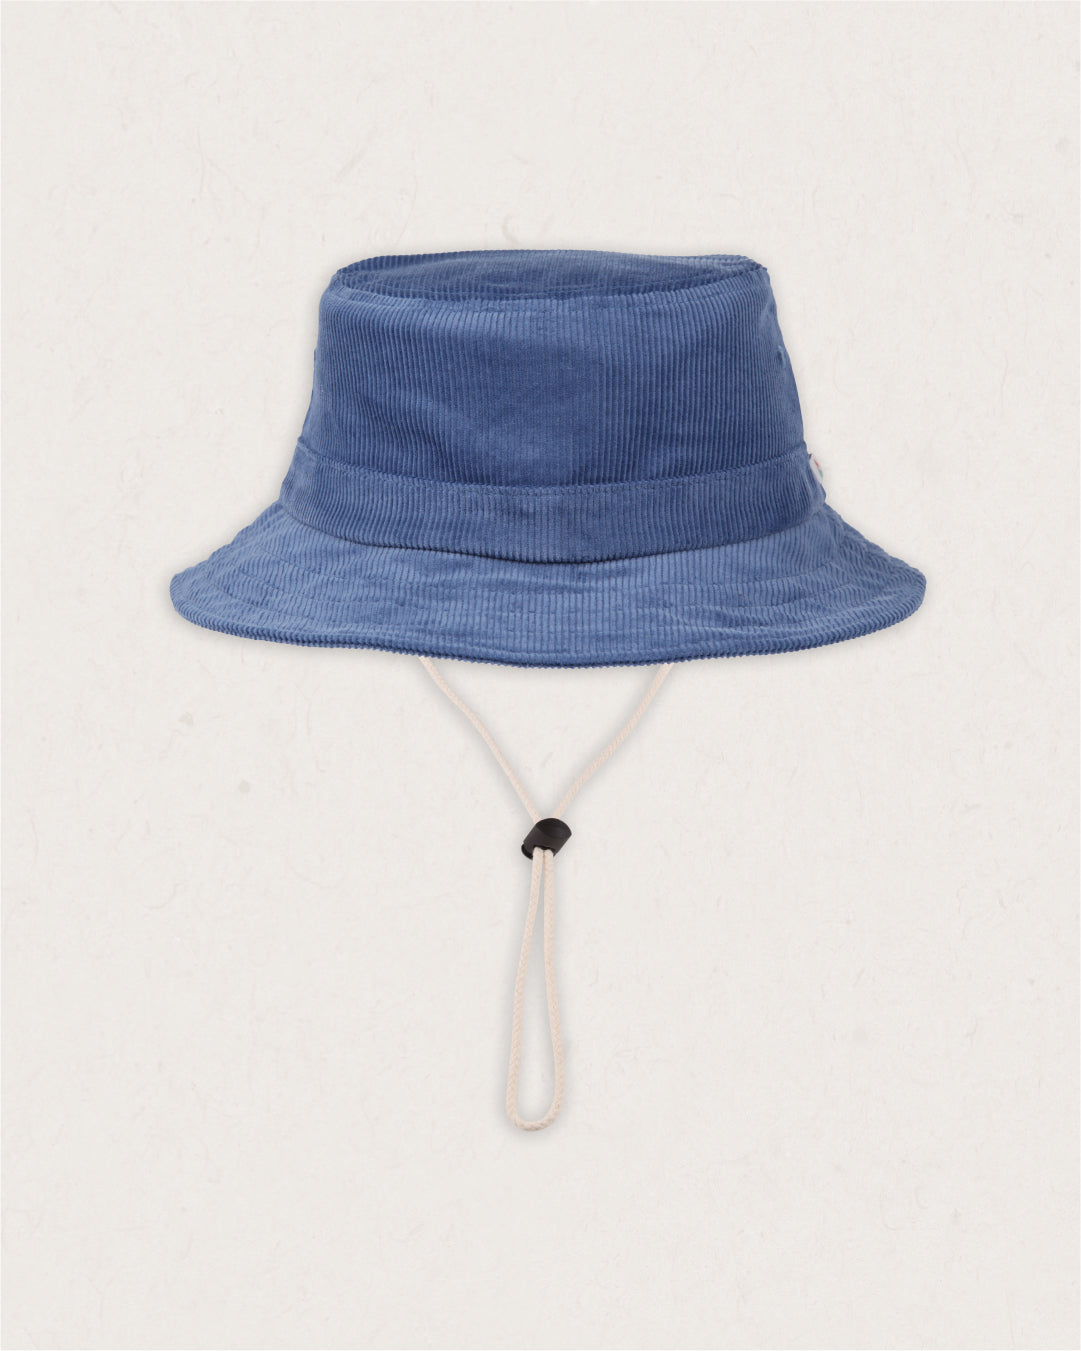 Urban Outfitters Iris Denim Bucket Hat | Pacific City